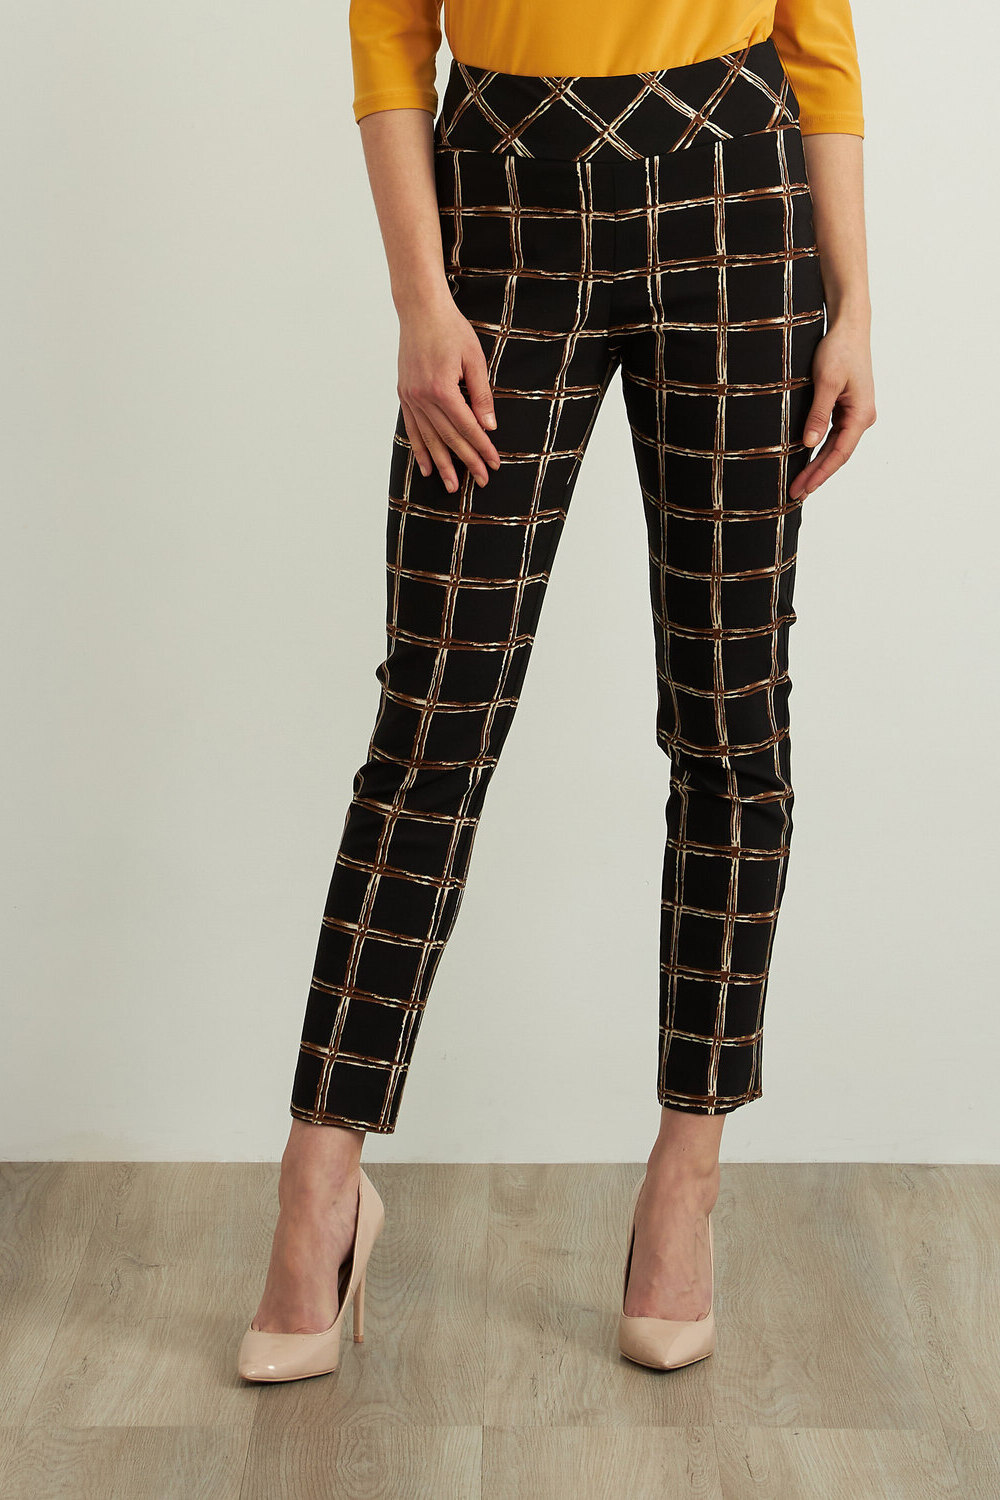 Joseph Ribkoff Checkered Print Pants Style 213643. Black/multi